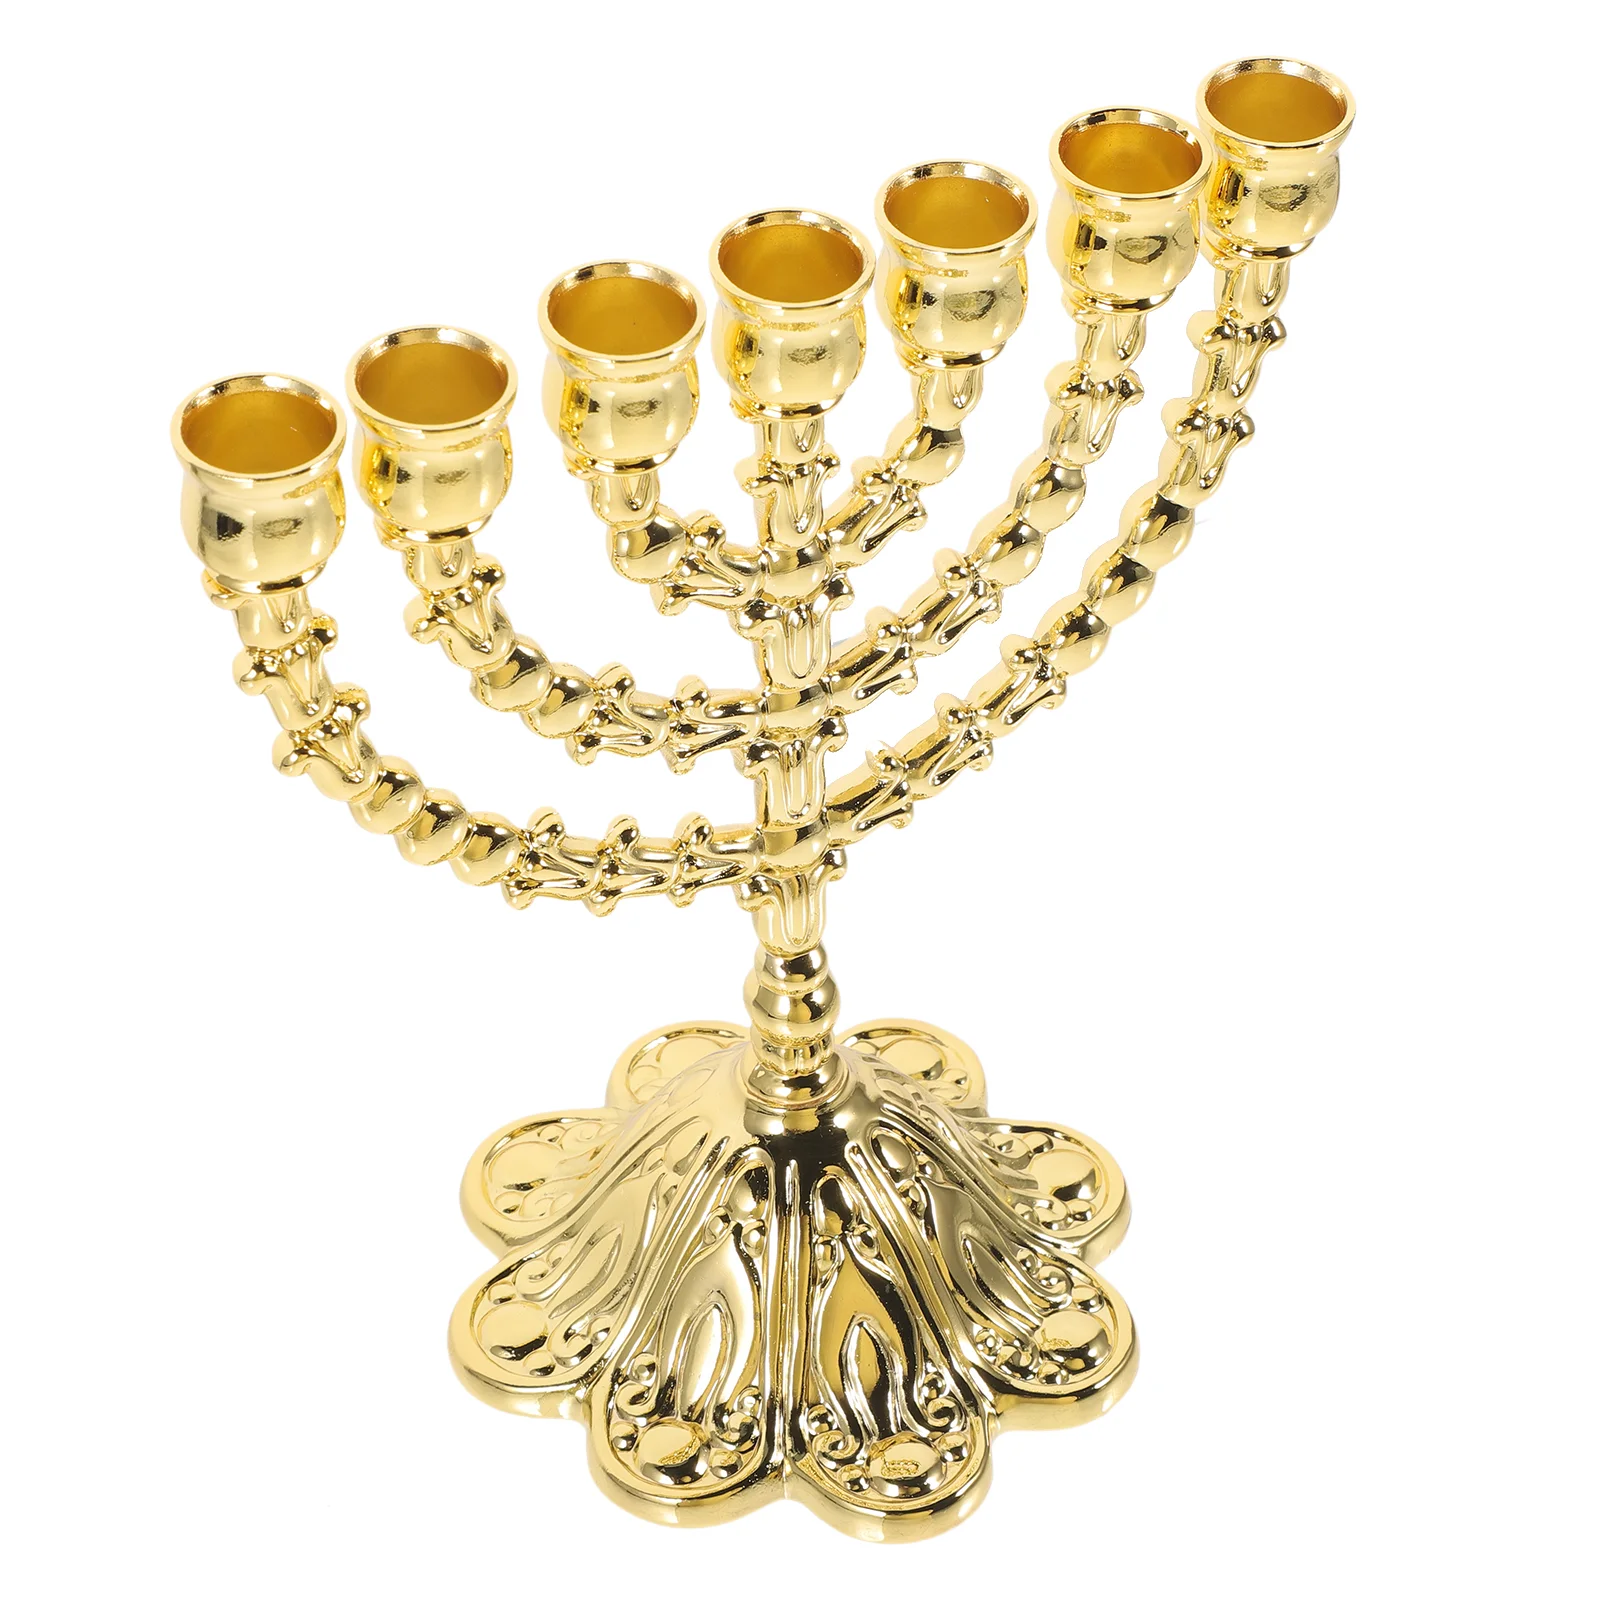 

Holder Menorah Branch Stand Metal Chanukah Hanukkah Jewish Candelabra Candlestick Vintage Table Religious Gold Jerusalem Decor